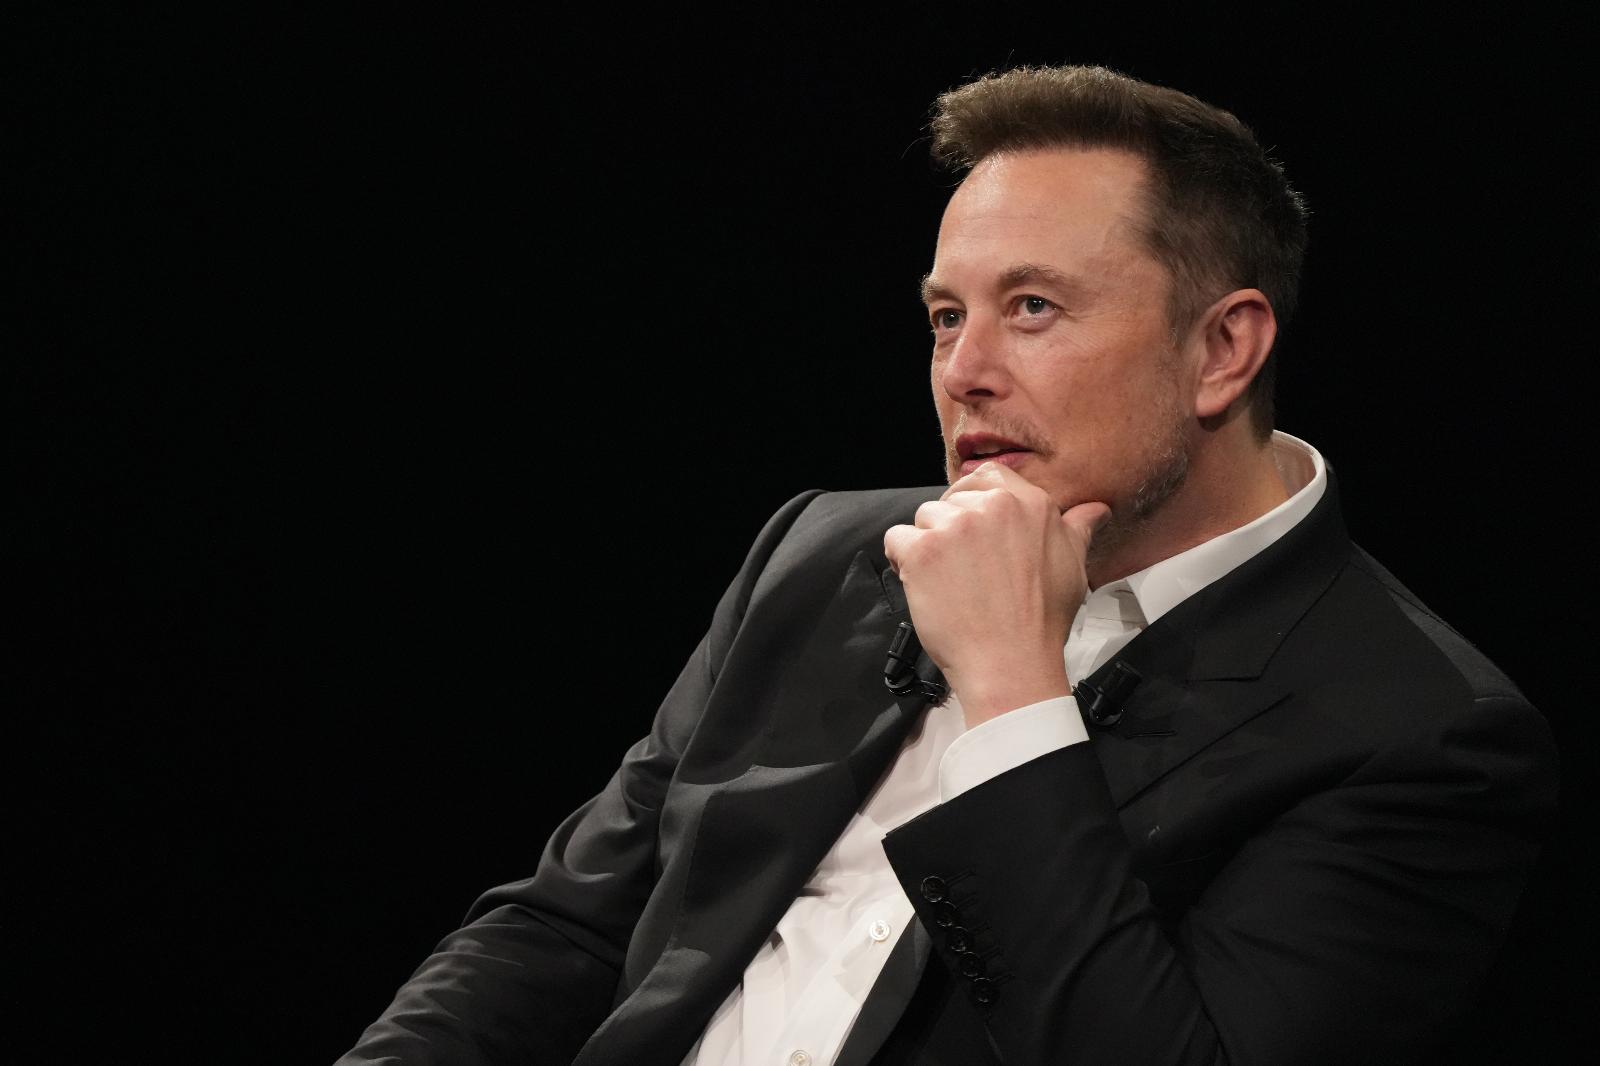 Neuralink, Elon Musk’s brain implant startup, quietly raises an additional $43M